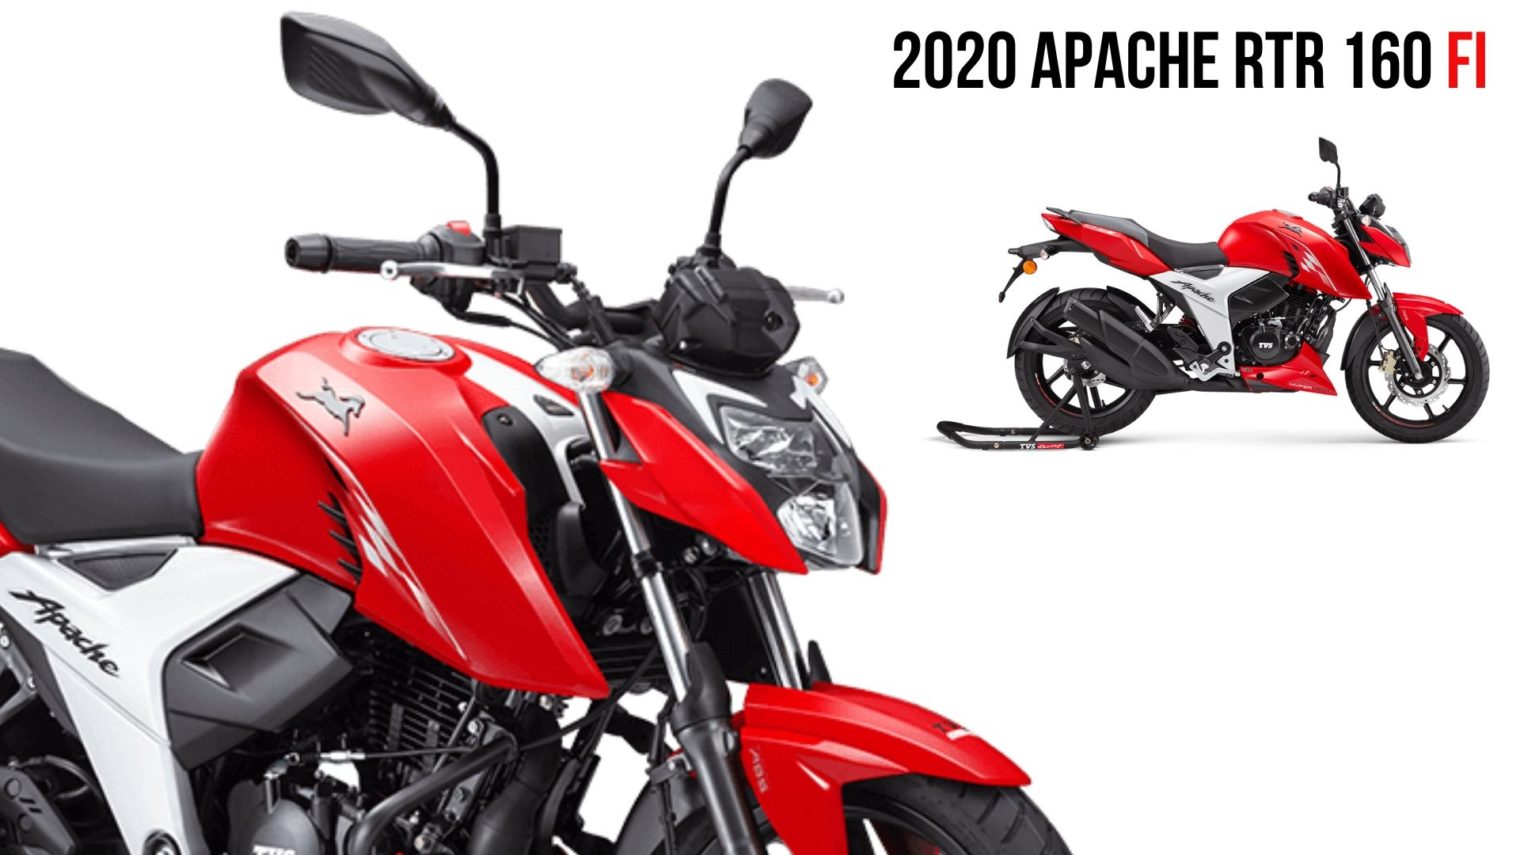 Tvs Apache Rtr 160 Ex Showroom Price 2020